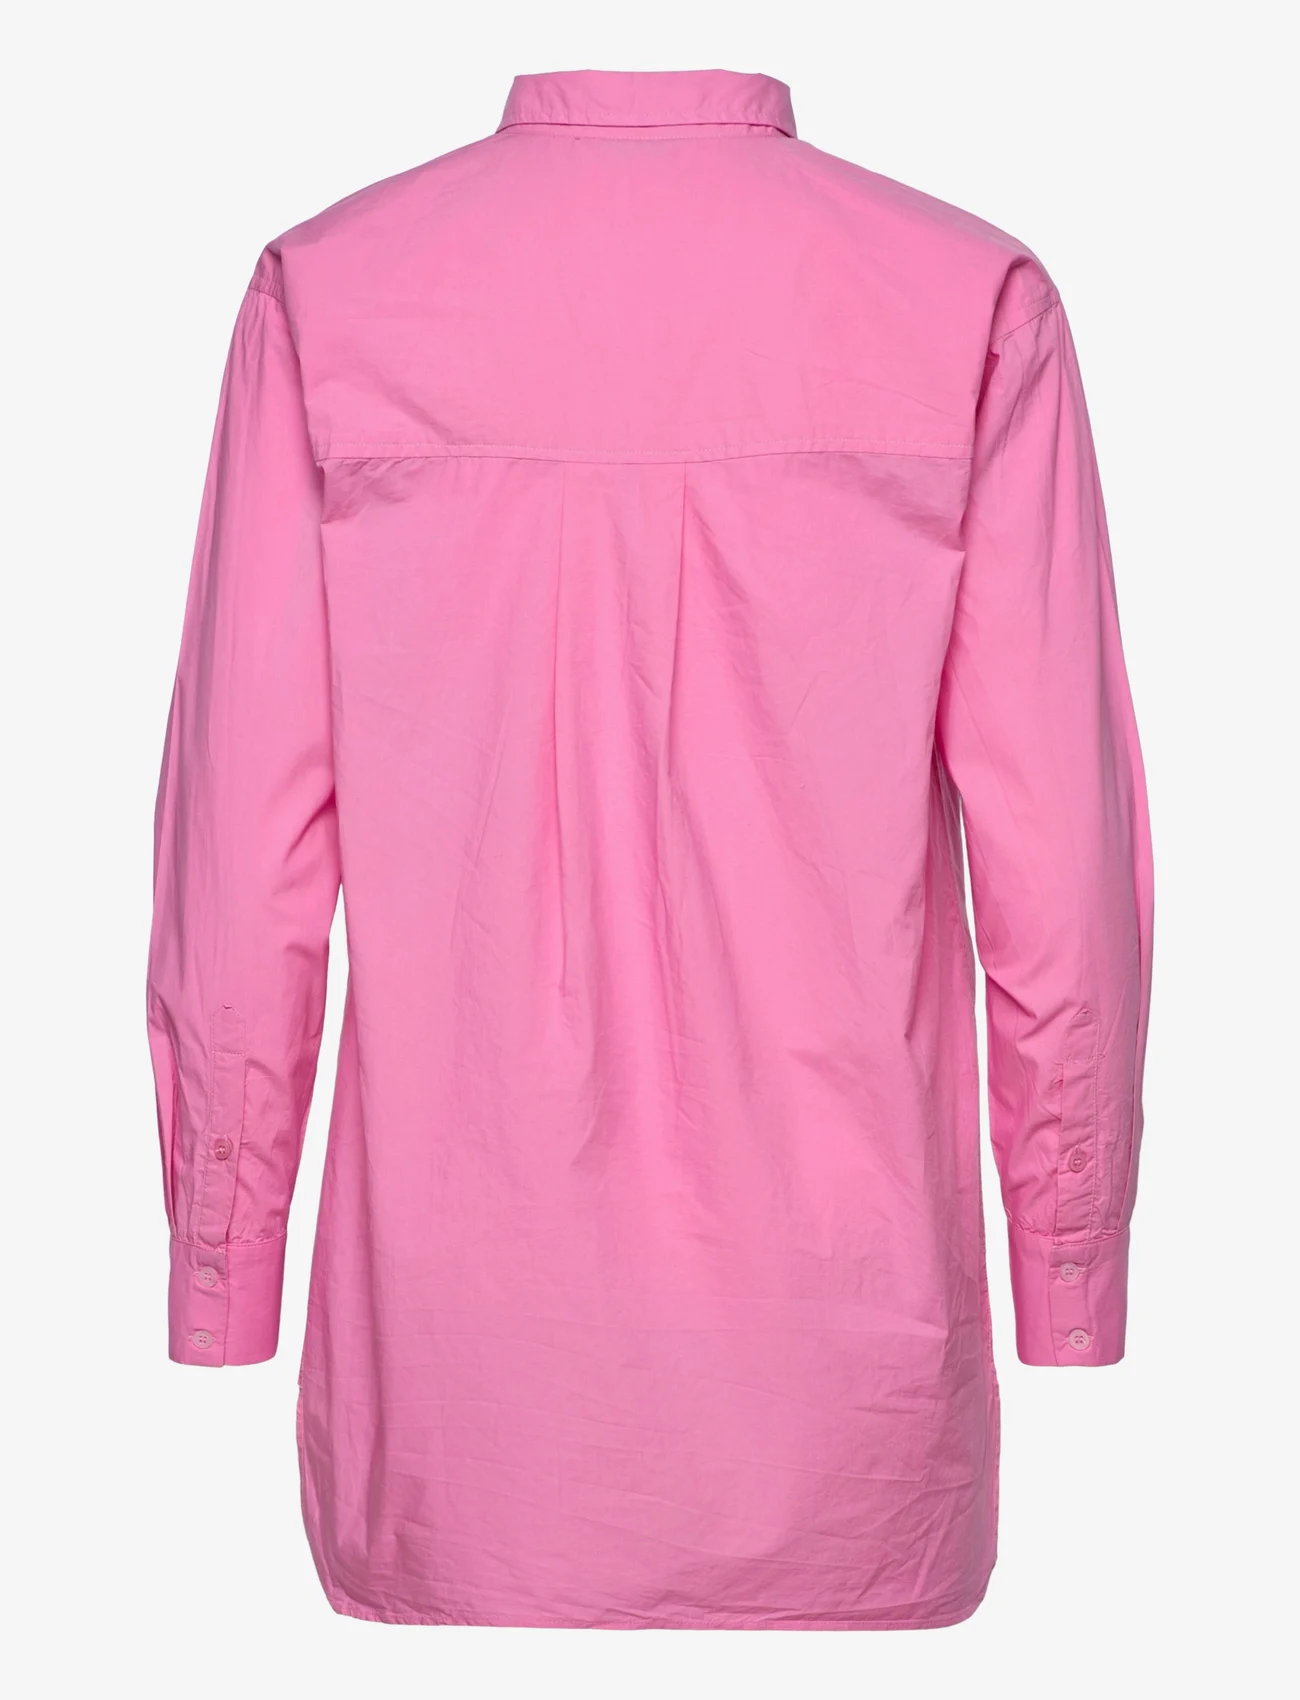 mbyM - M-Brisa - langärmlige hemden - fuchsia pink - 1